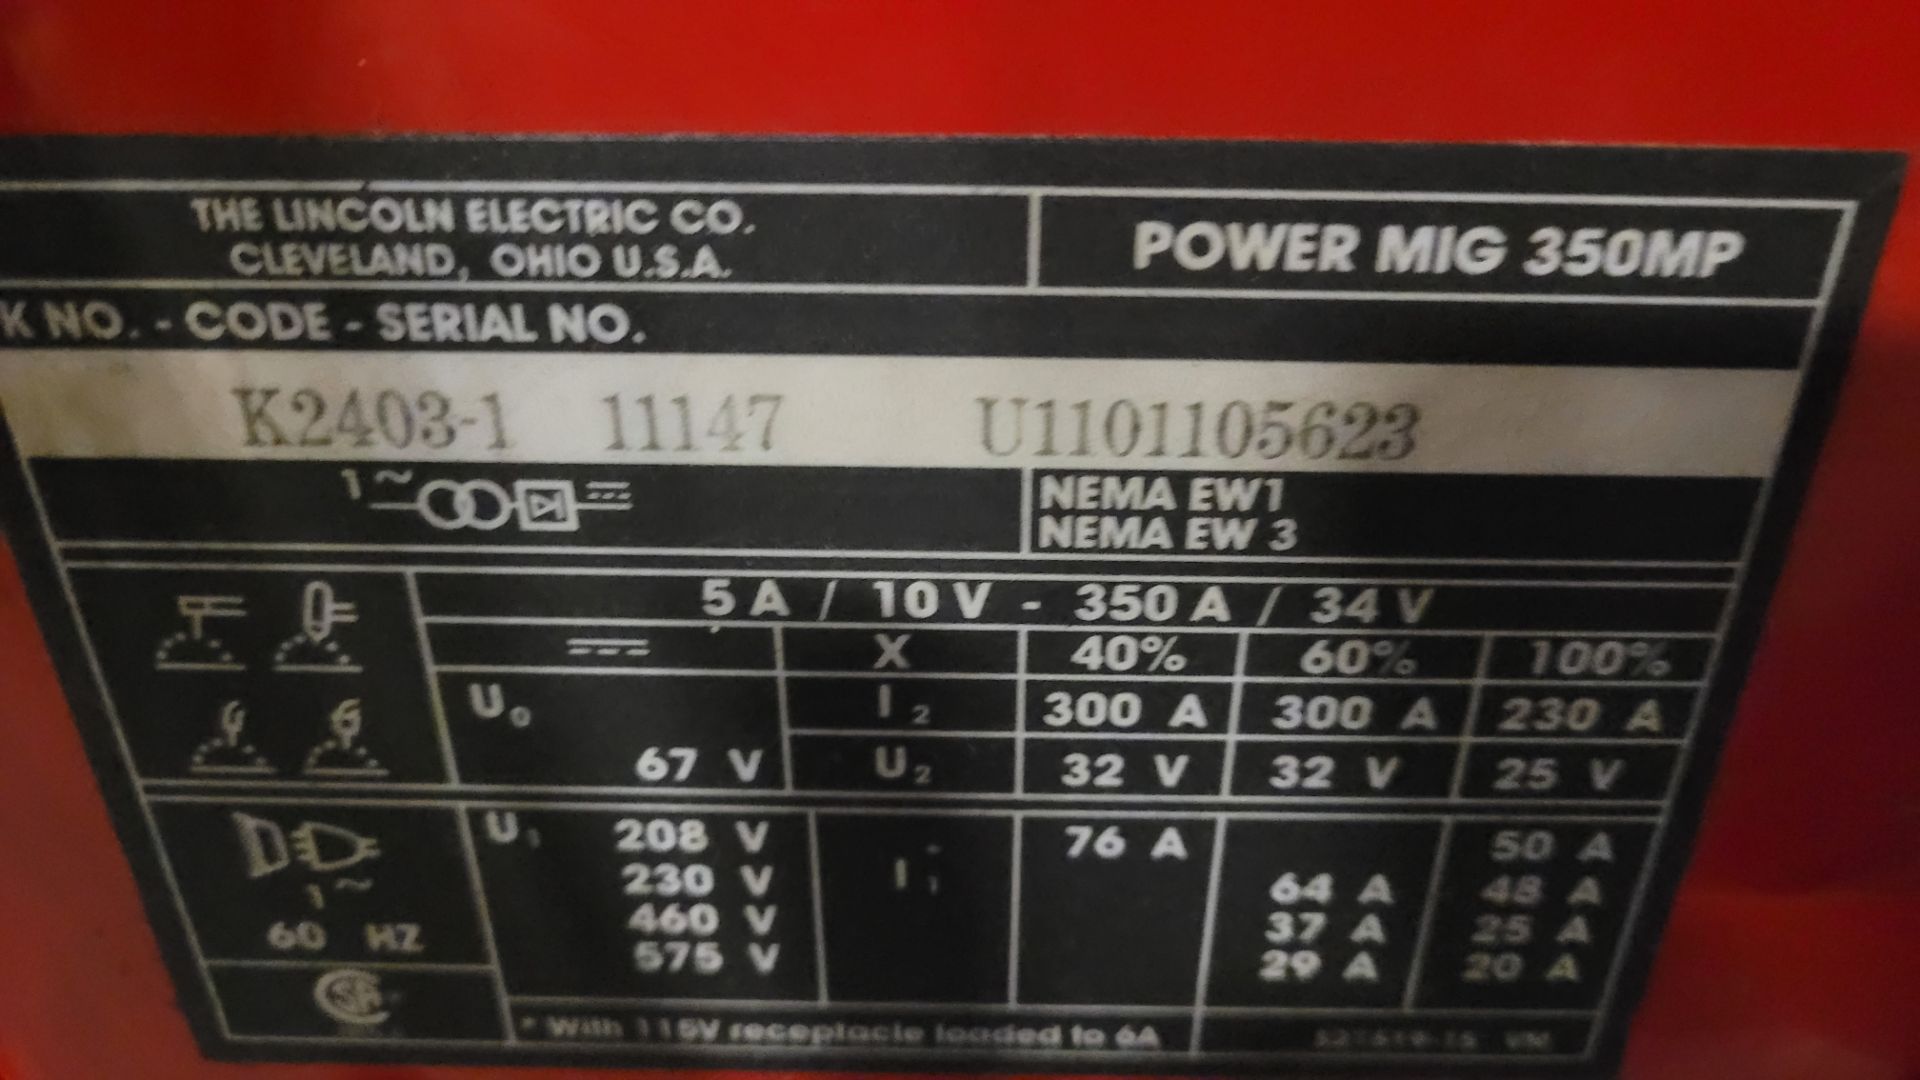 LINCOLN ELECTRIC 350 MP POWER MIG WELDER, CODE K2403-1 11147, S/N U1101105623 - Image 3 of 3